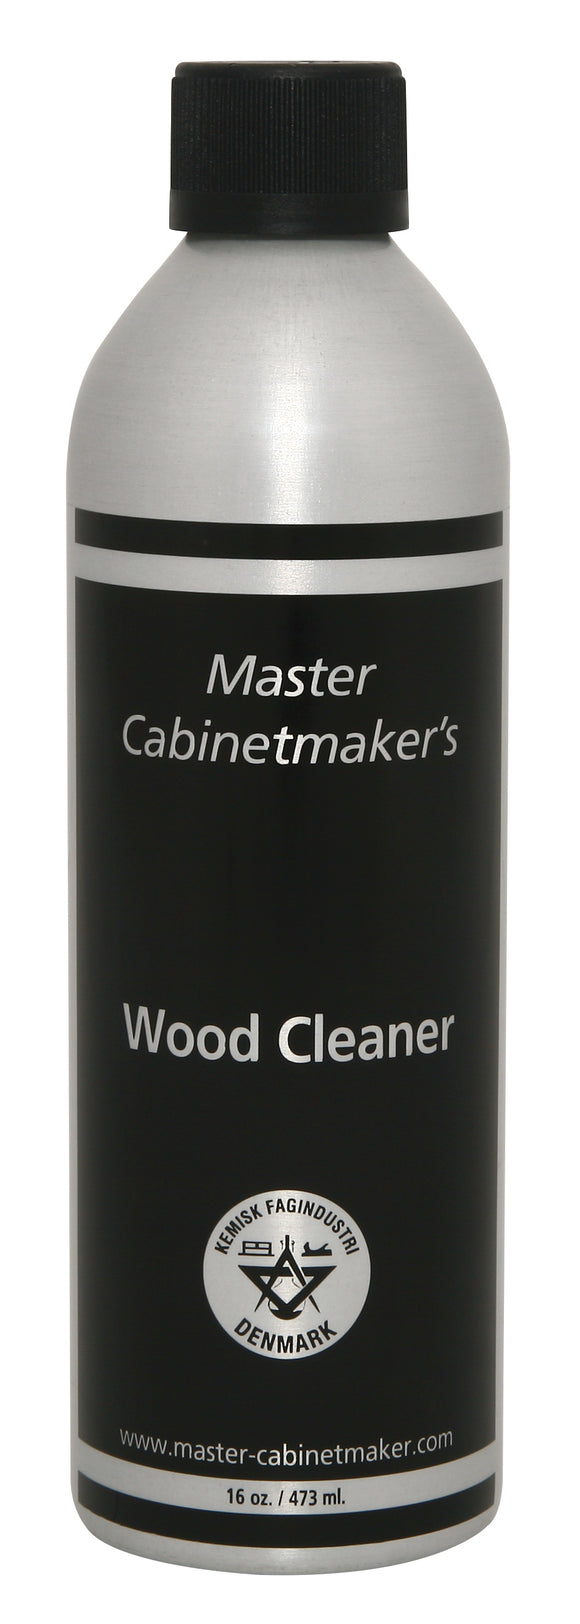 Master Cabinetmaker Wood Cleaner